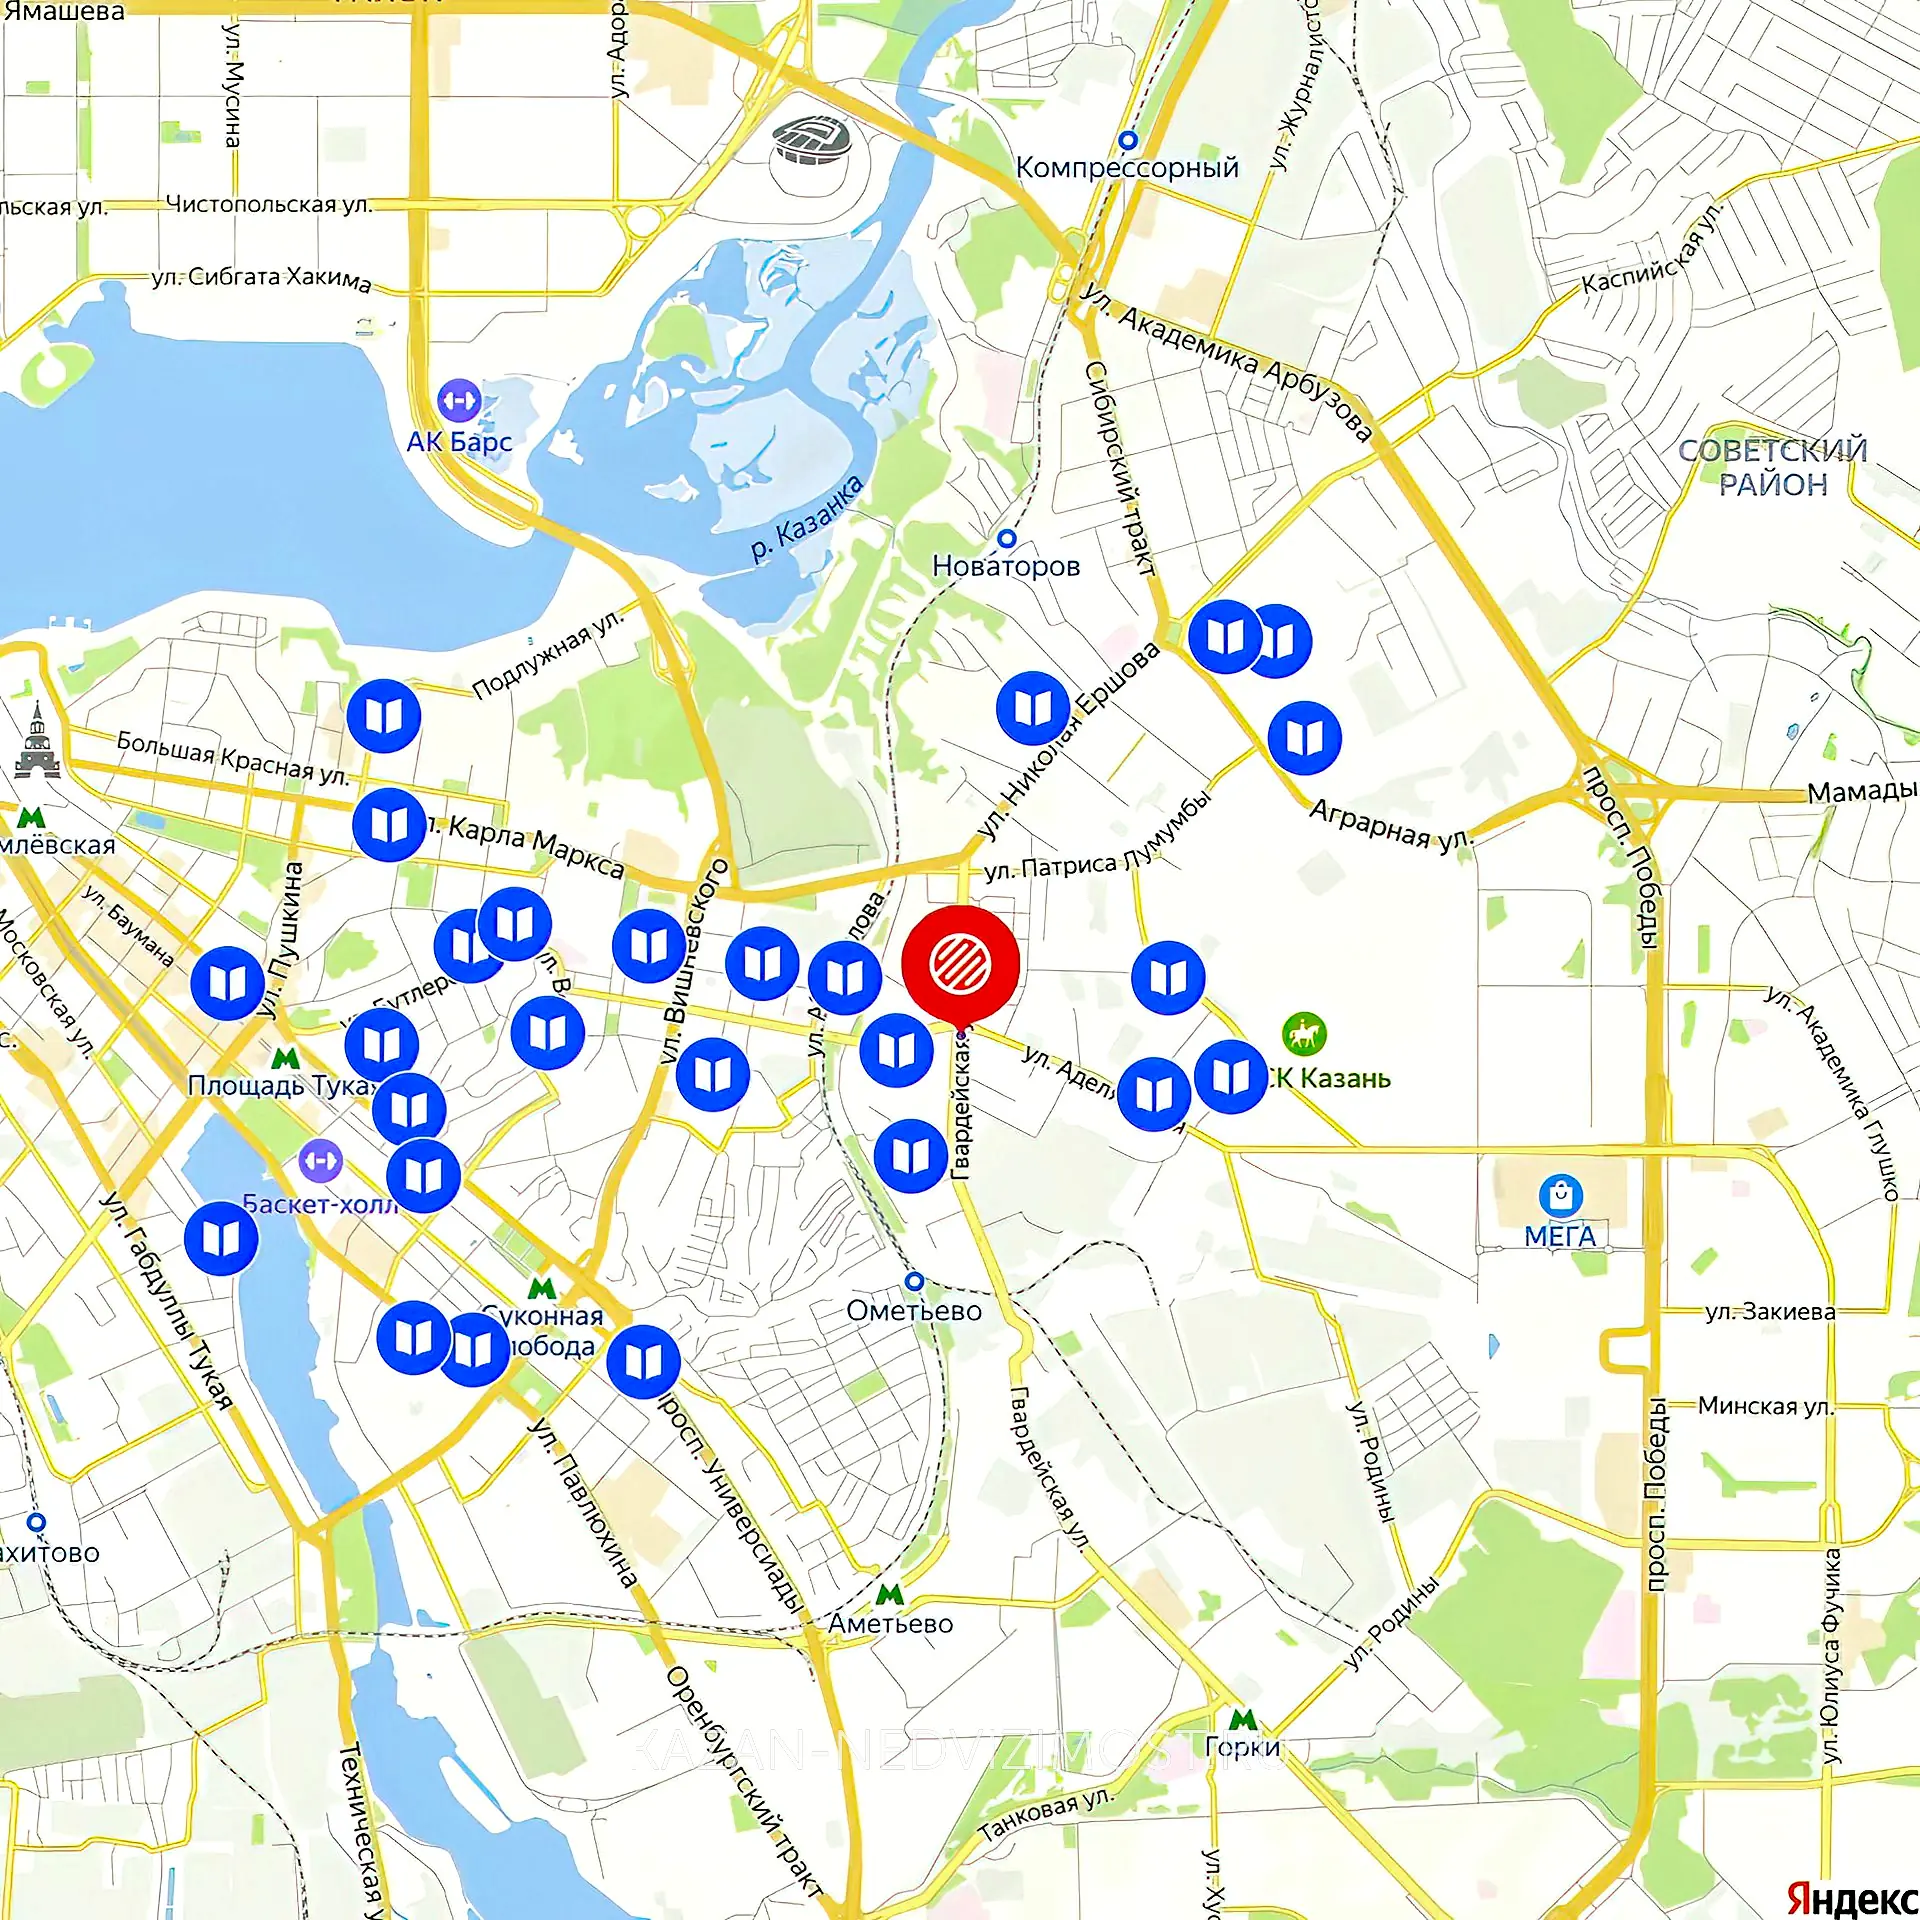 Расположение и маршрут на карте от ЖК Гвардейская 31/42 до центра города